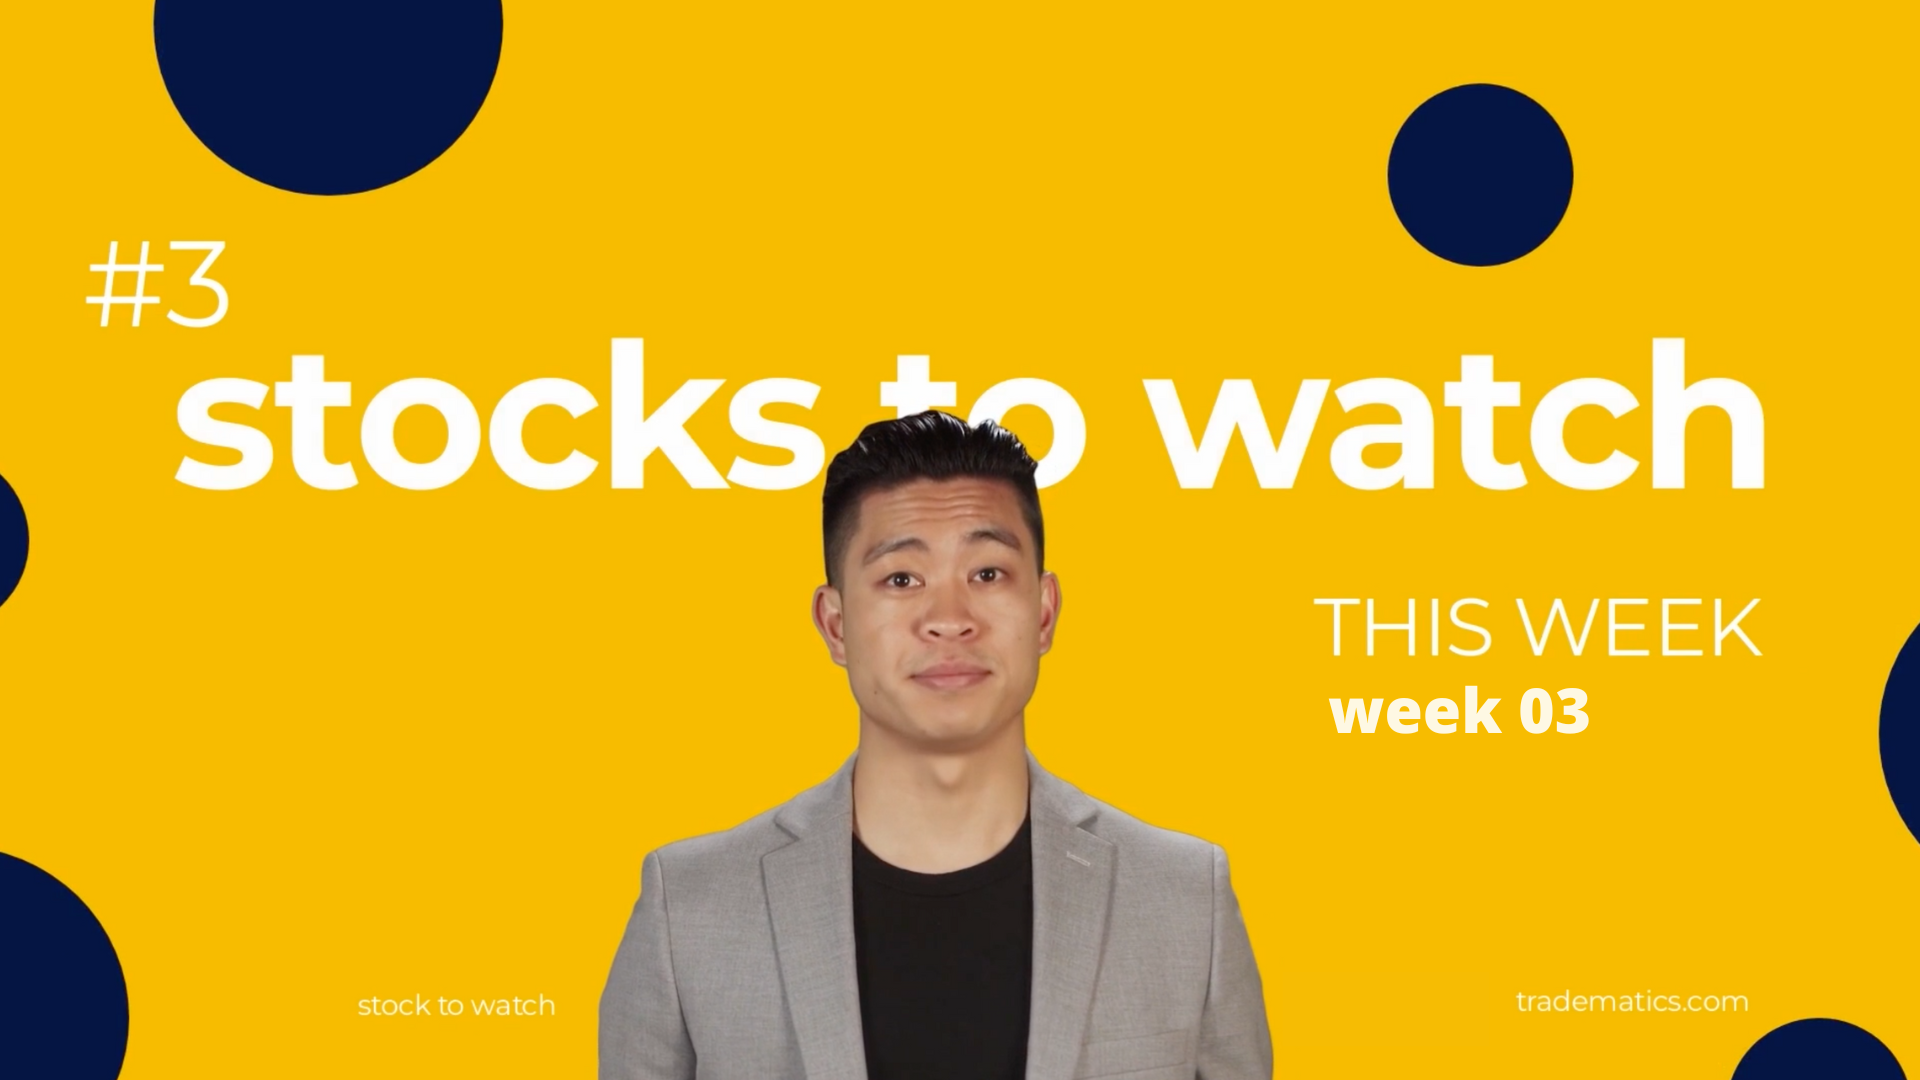 Tradematics | Stocks to Watch this week | week 03